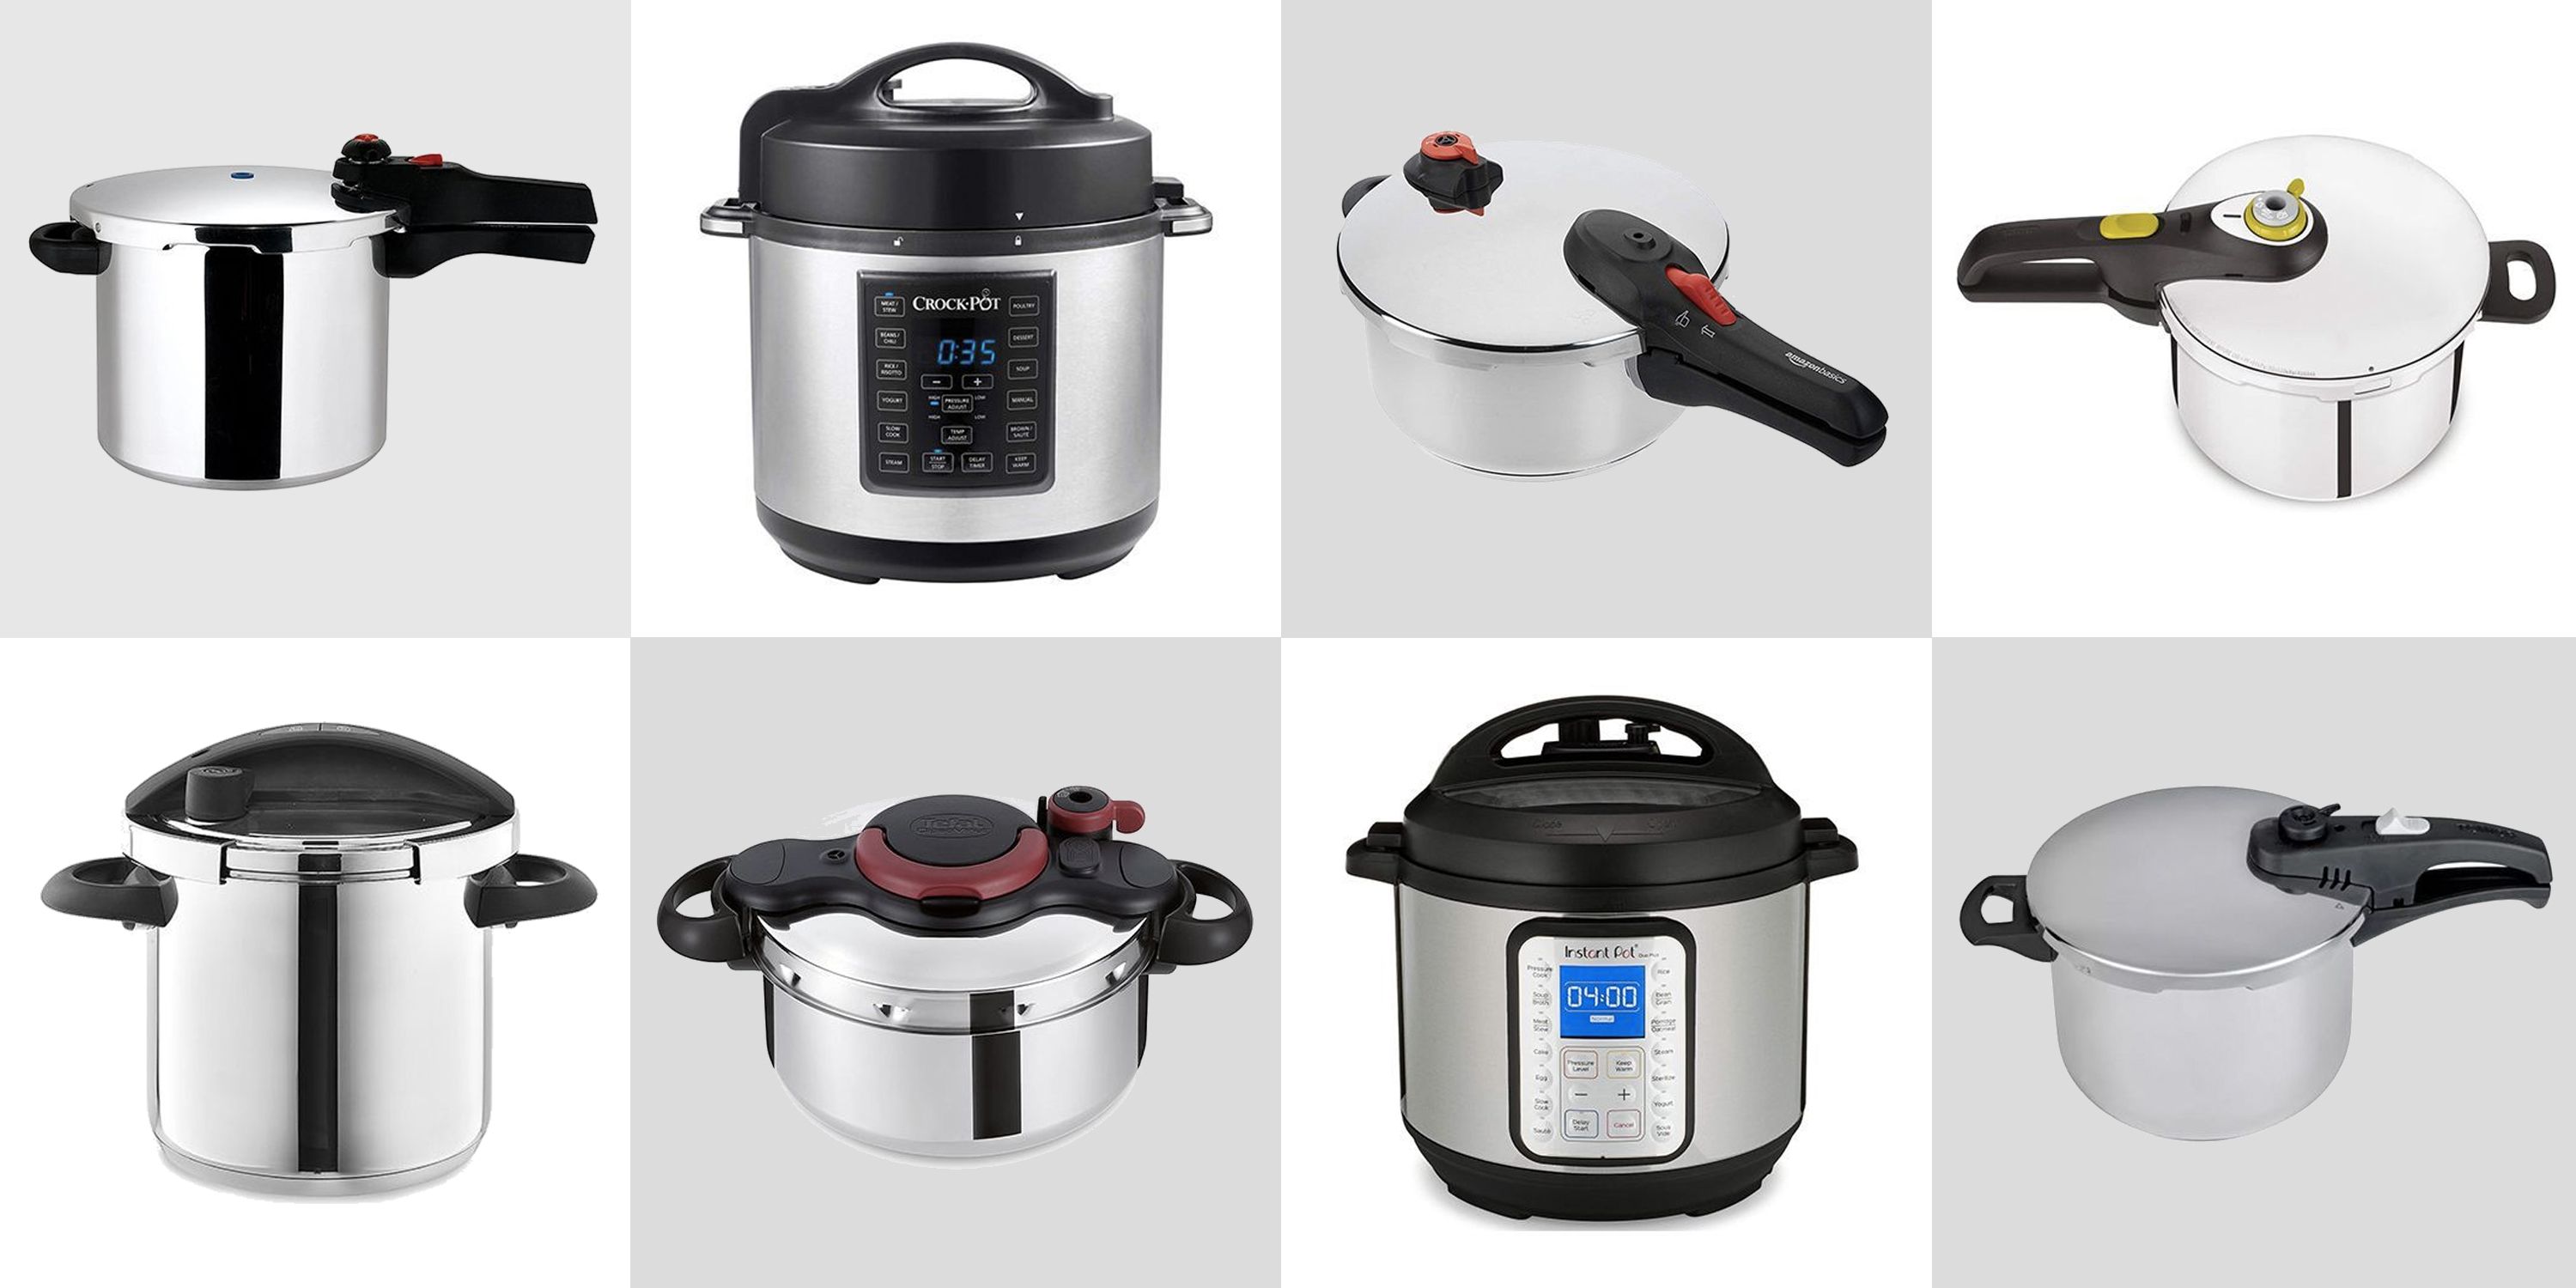 Versatile Ambiano 2-in-1 Multi Cooker: Pressure Cooker & Air Fryer